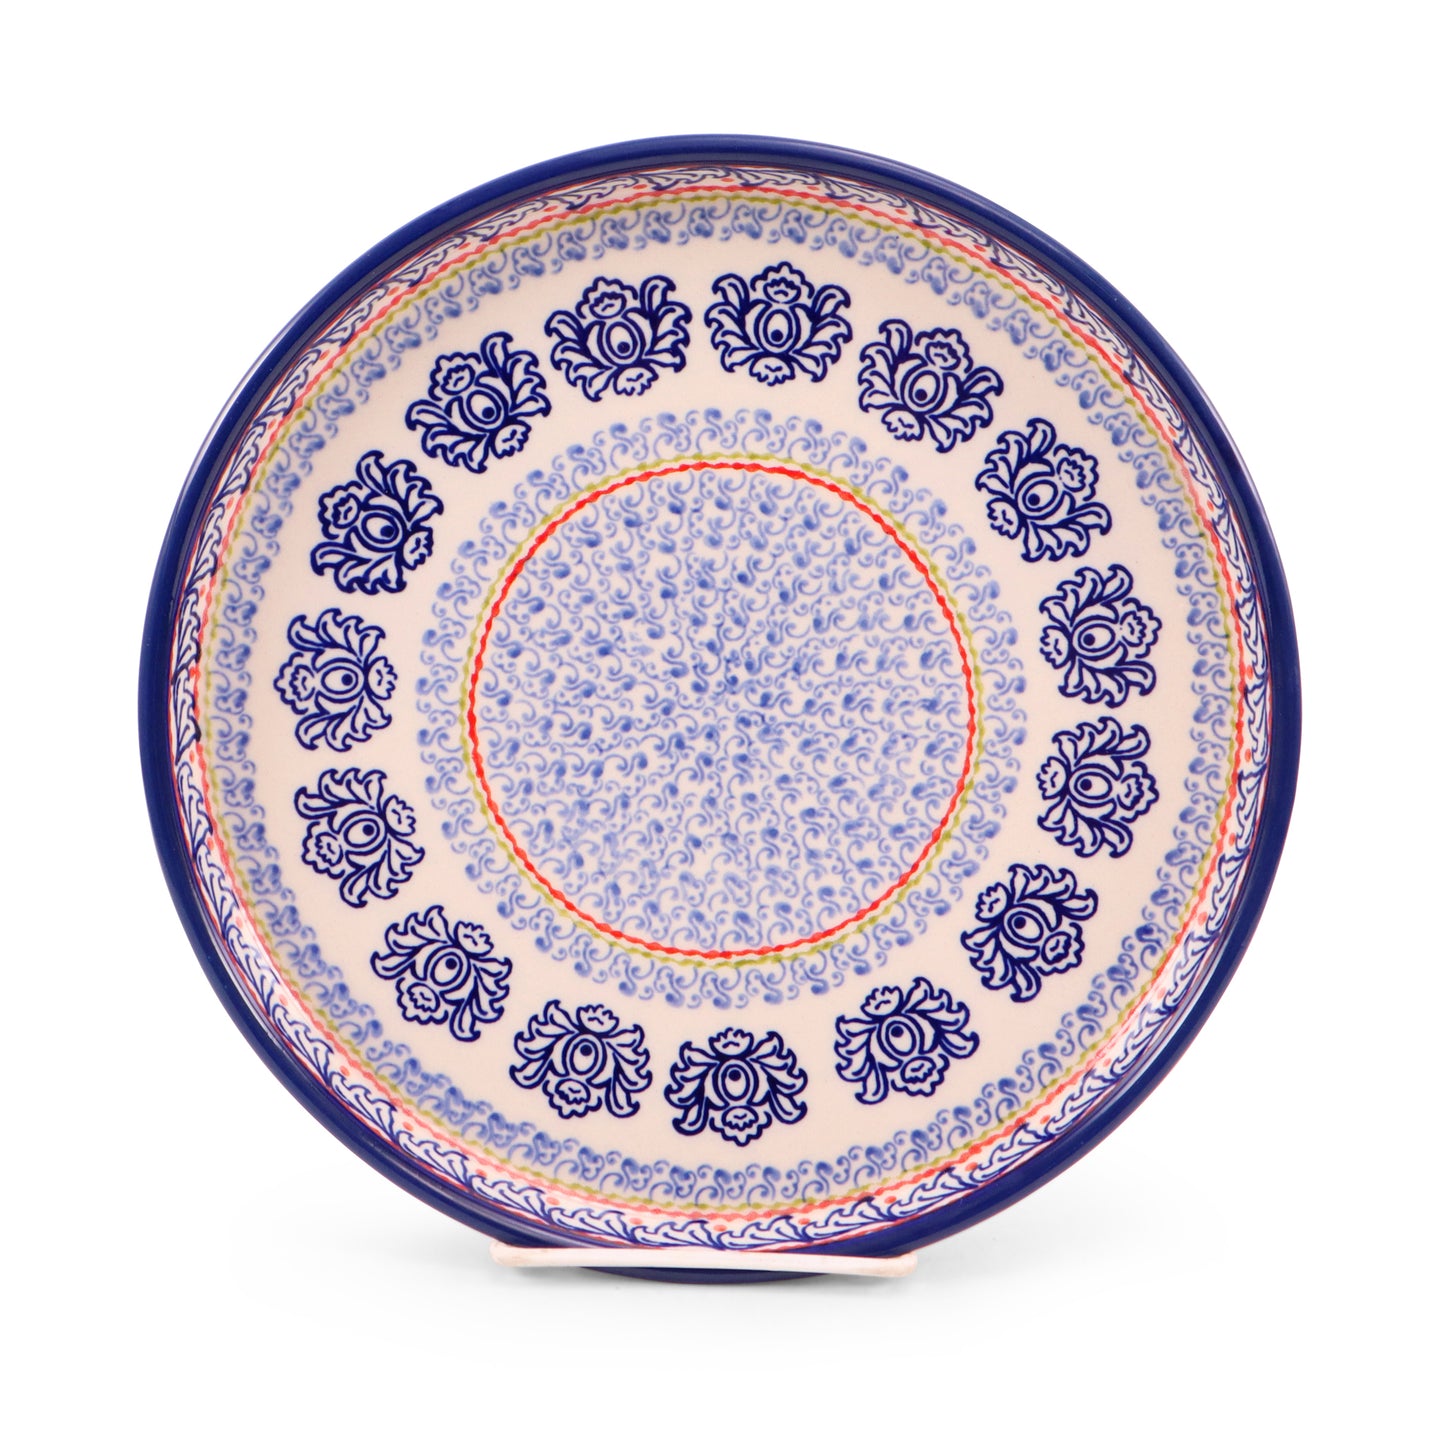 9.5" Serving Plate. Pattern: Blue Lace